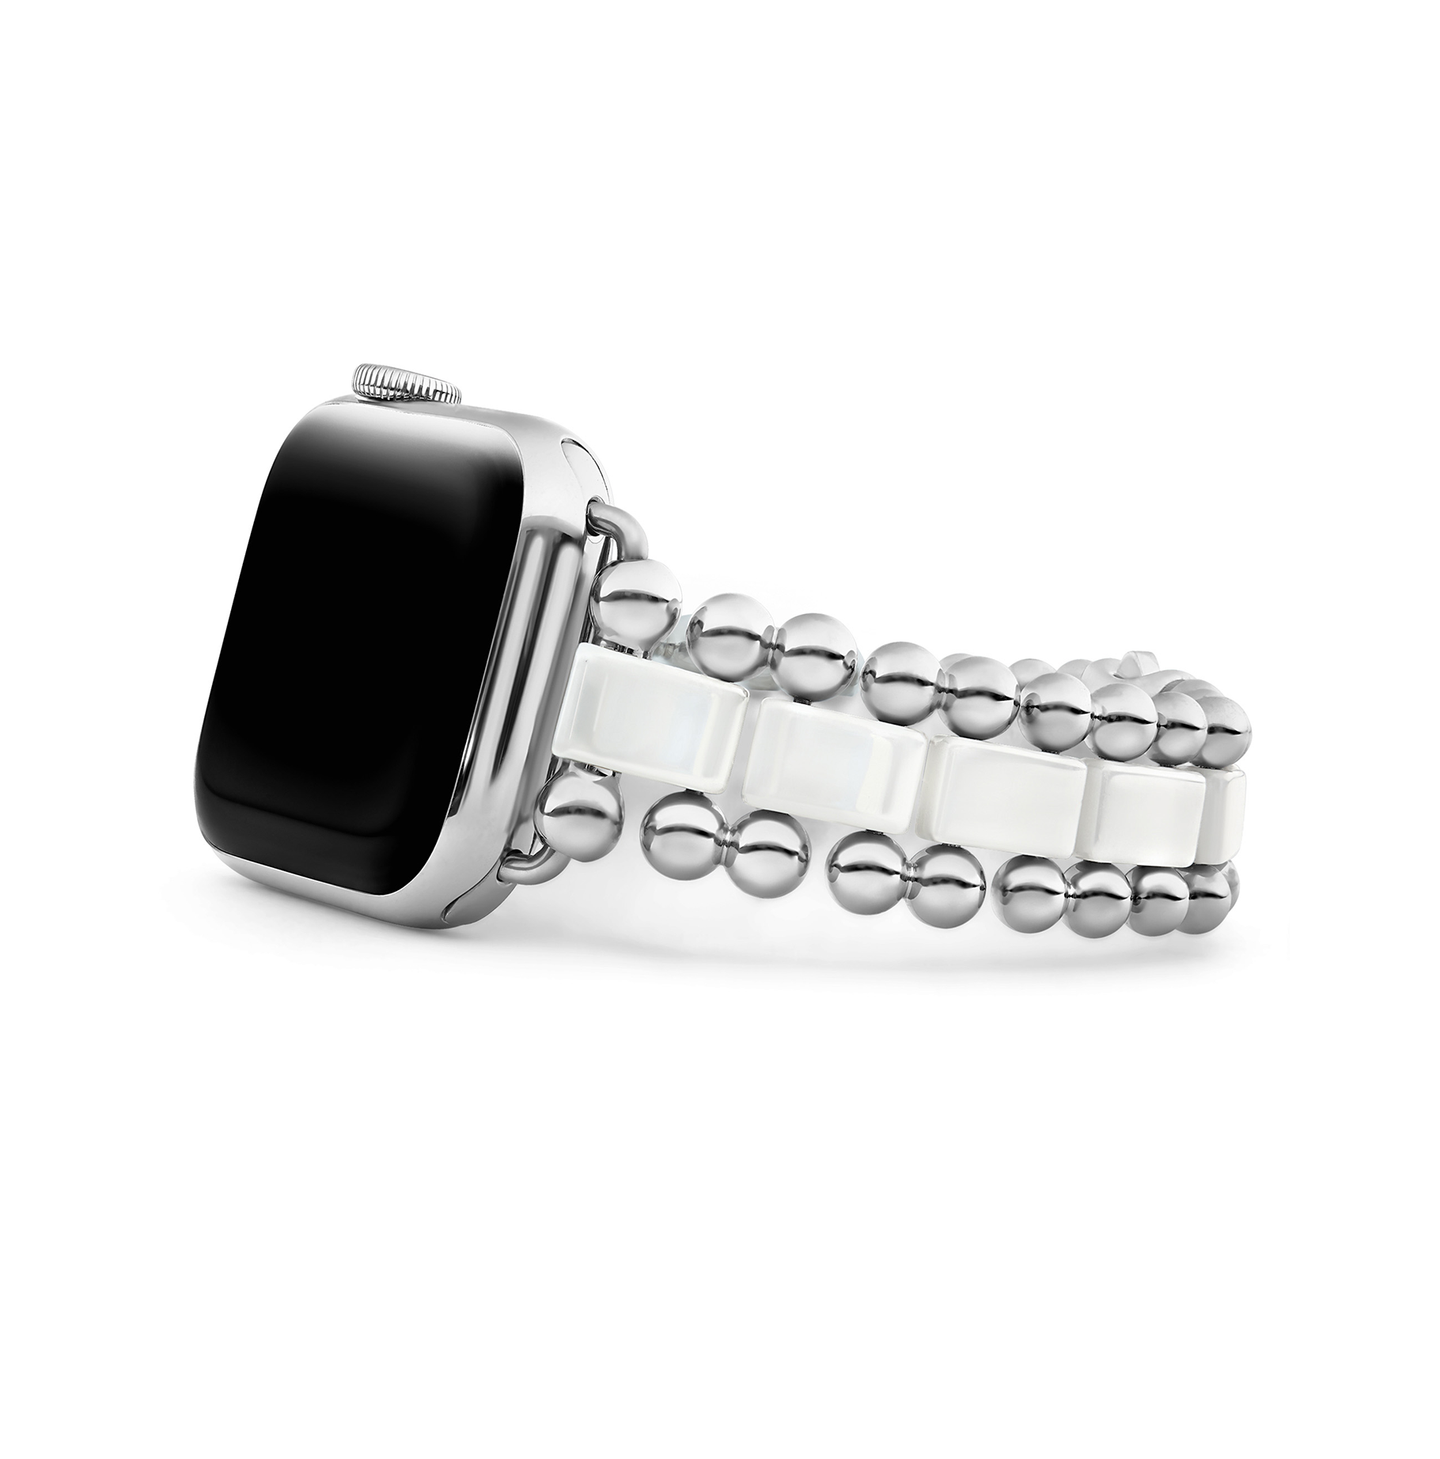 LAGOS Smart Caviar White Ceramic and Stainless Steel Watch Bracelet